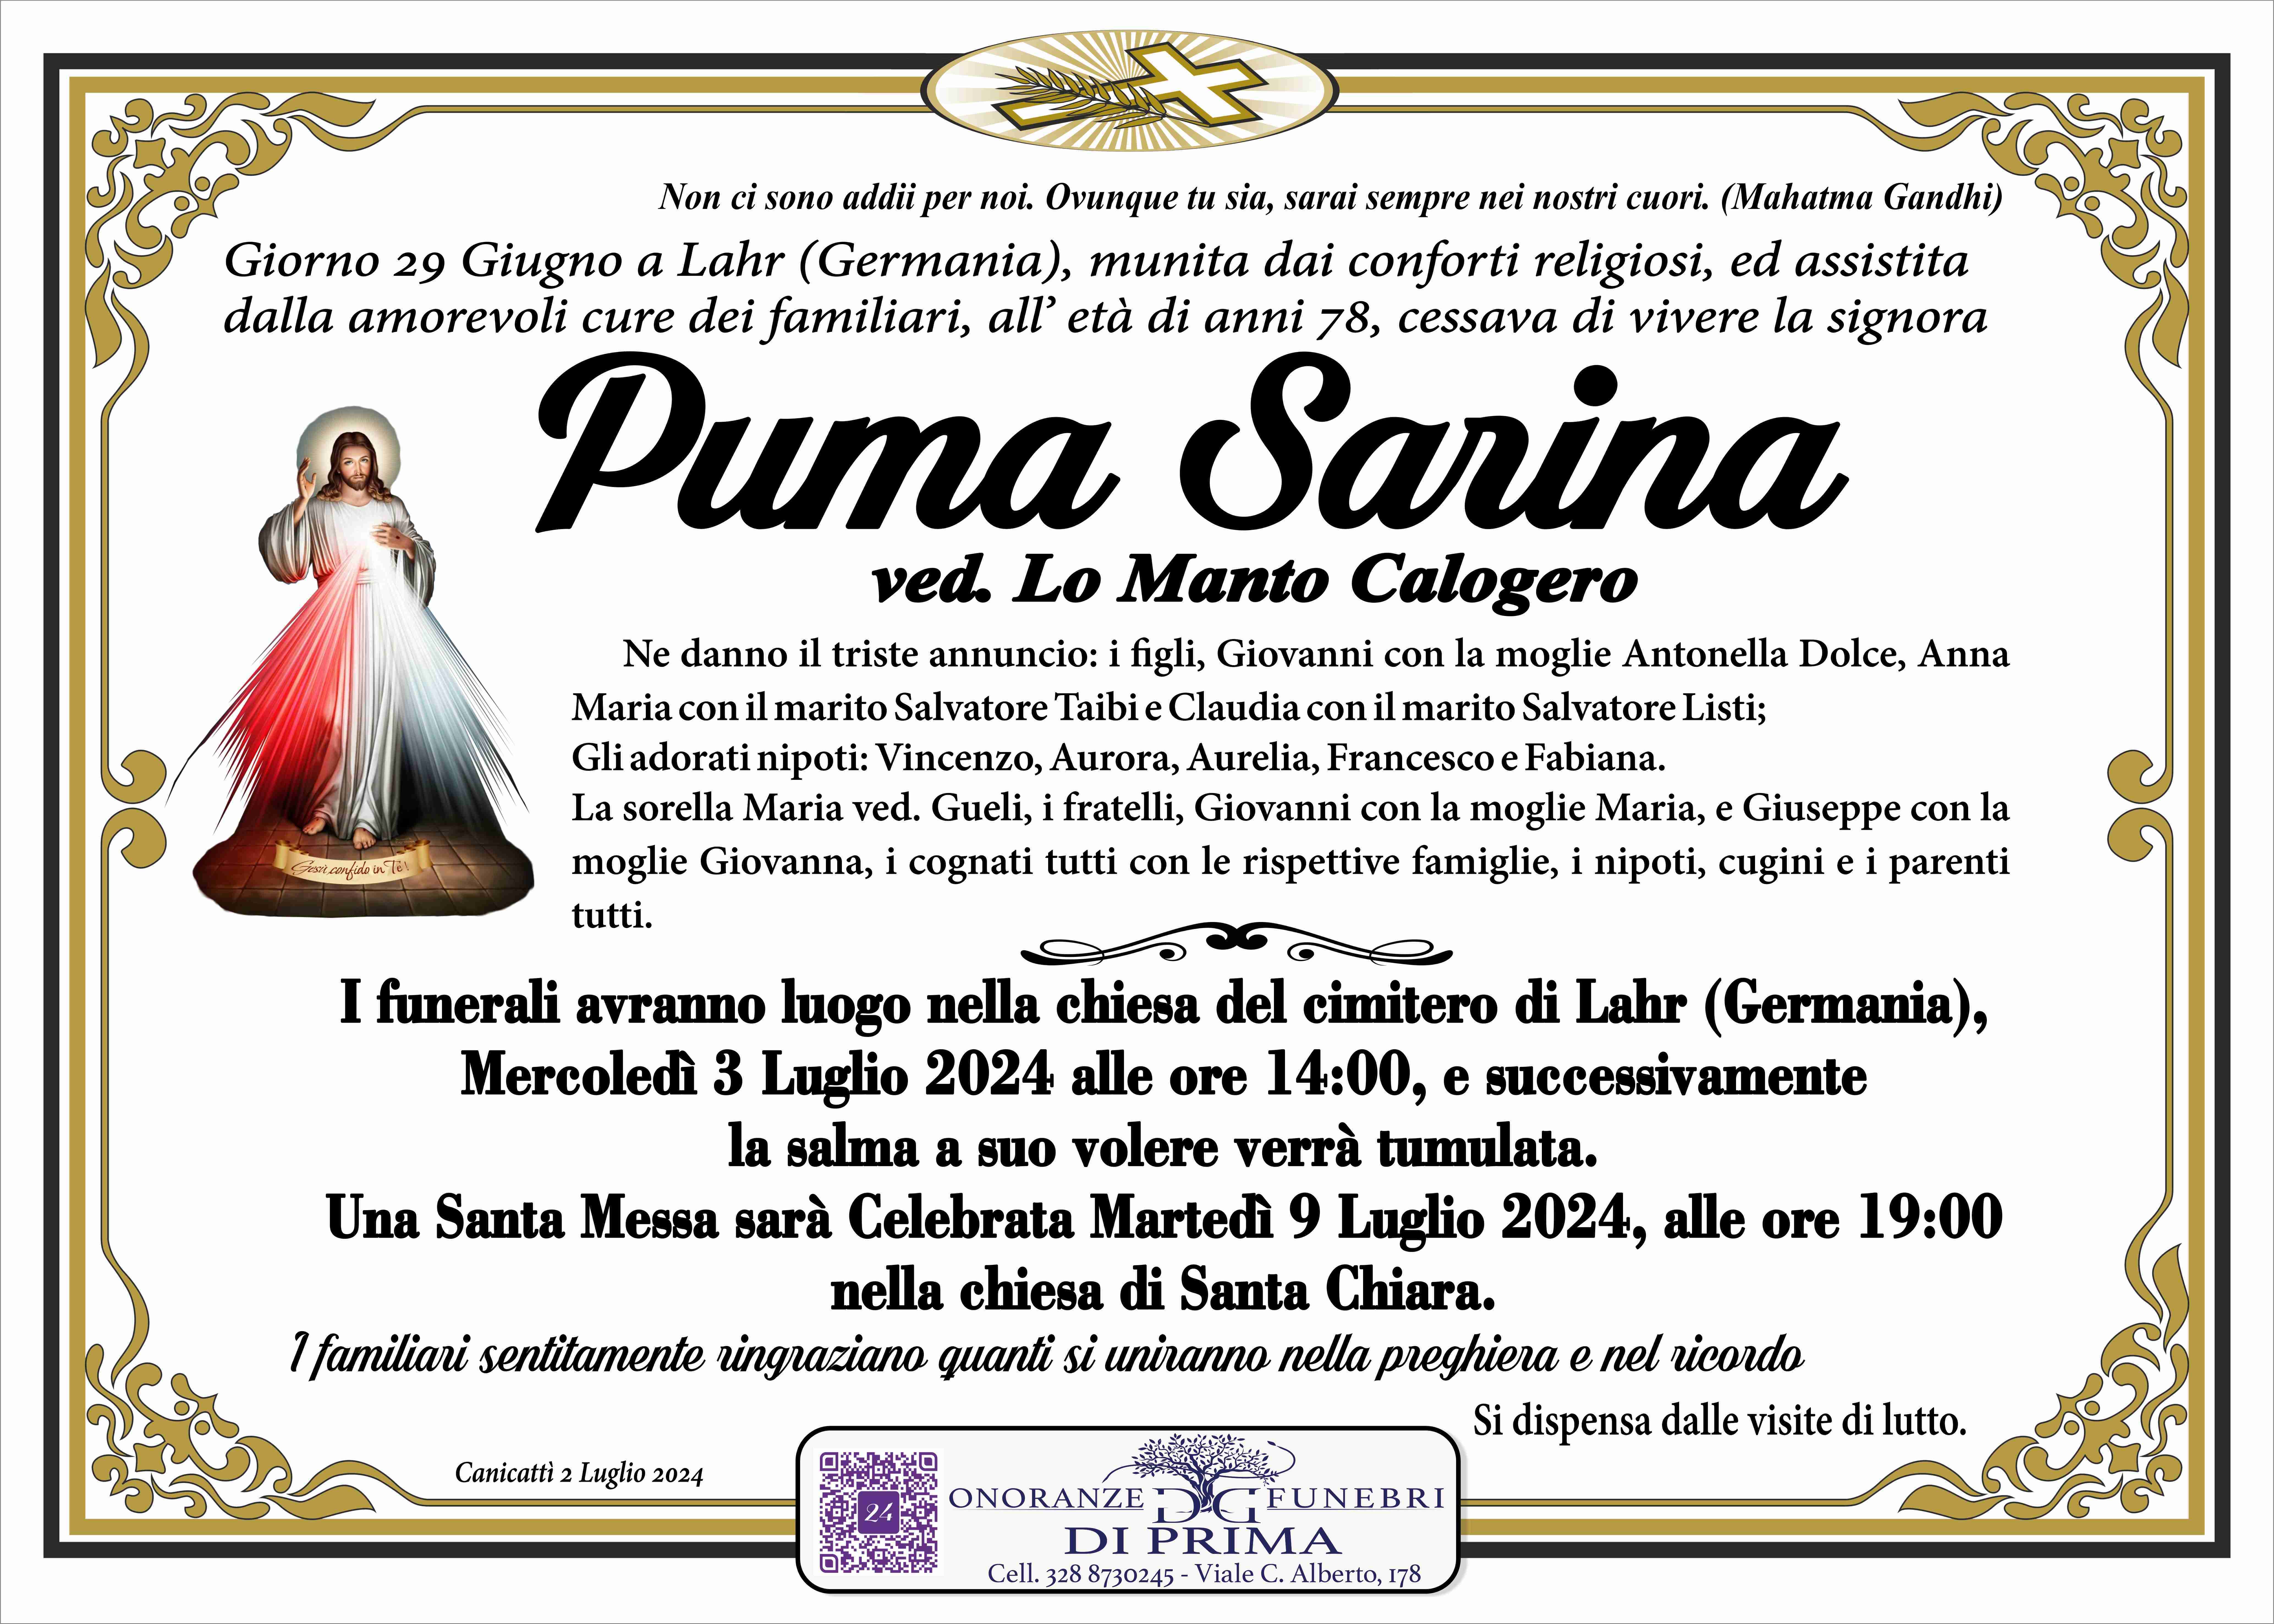 Sarina Puma